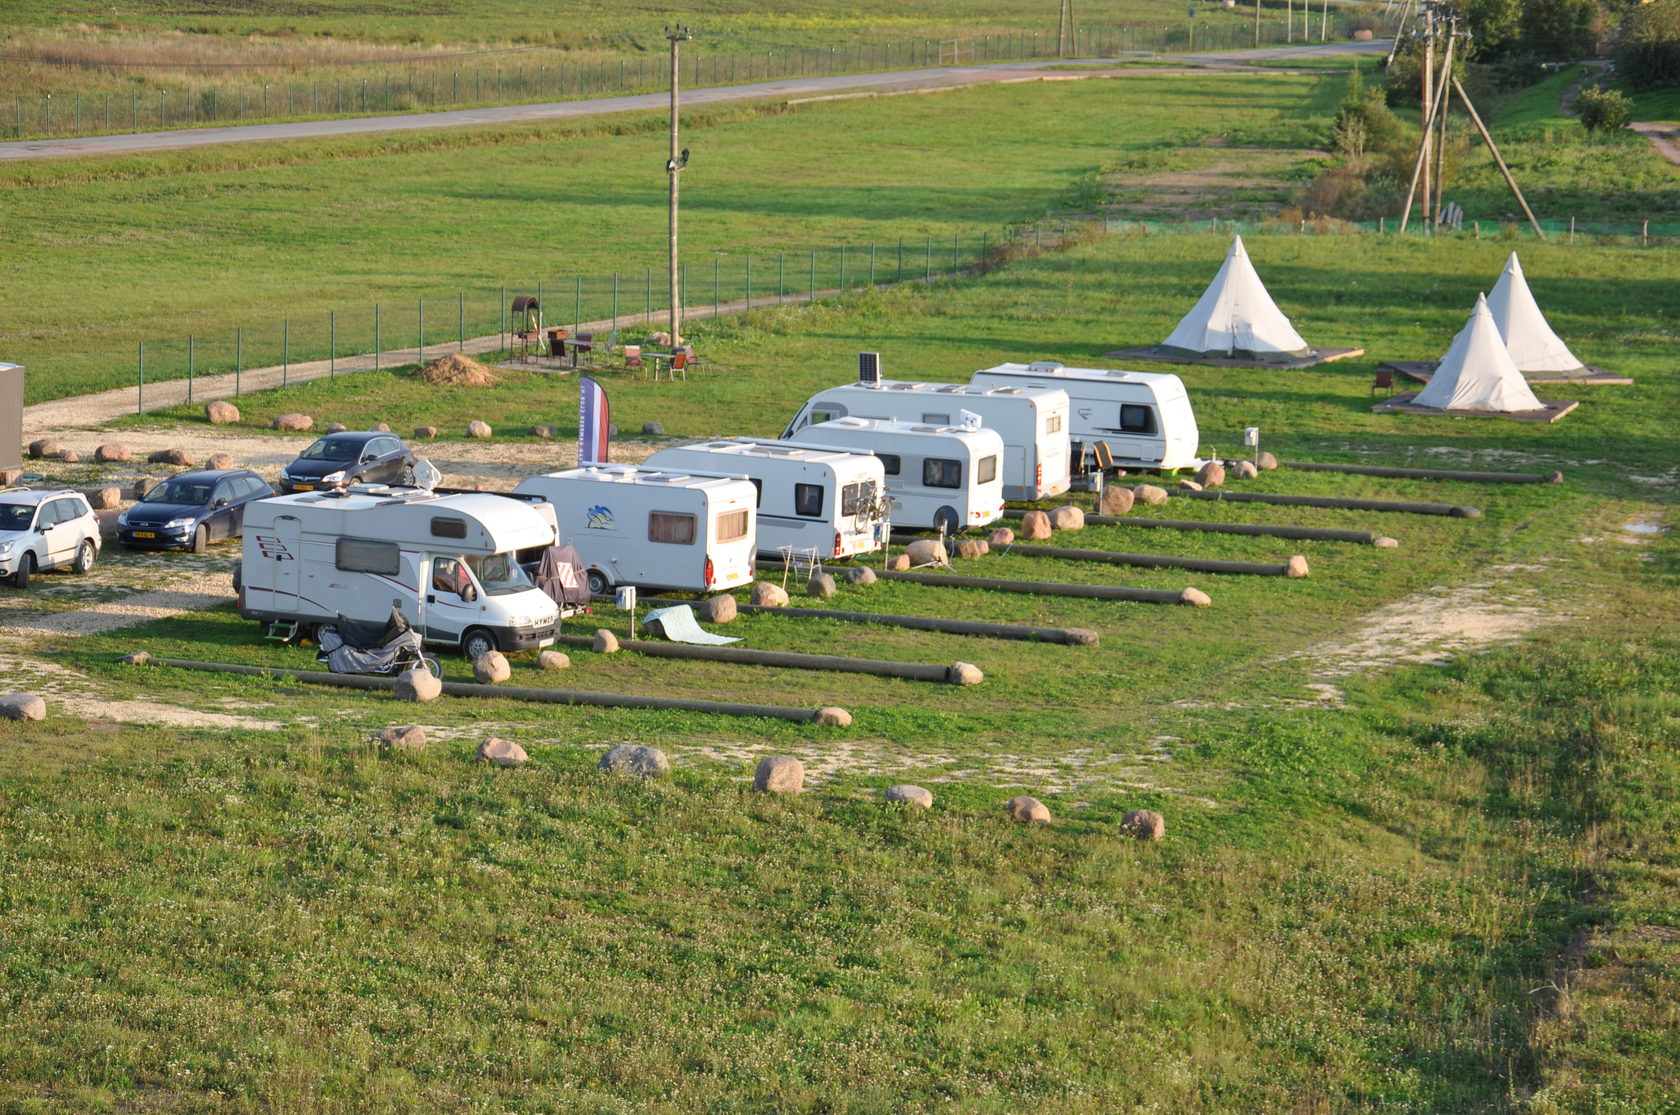 Http camping ru